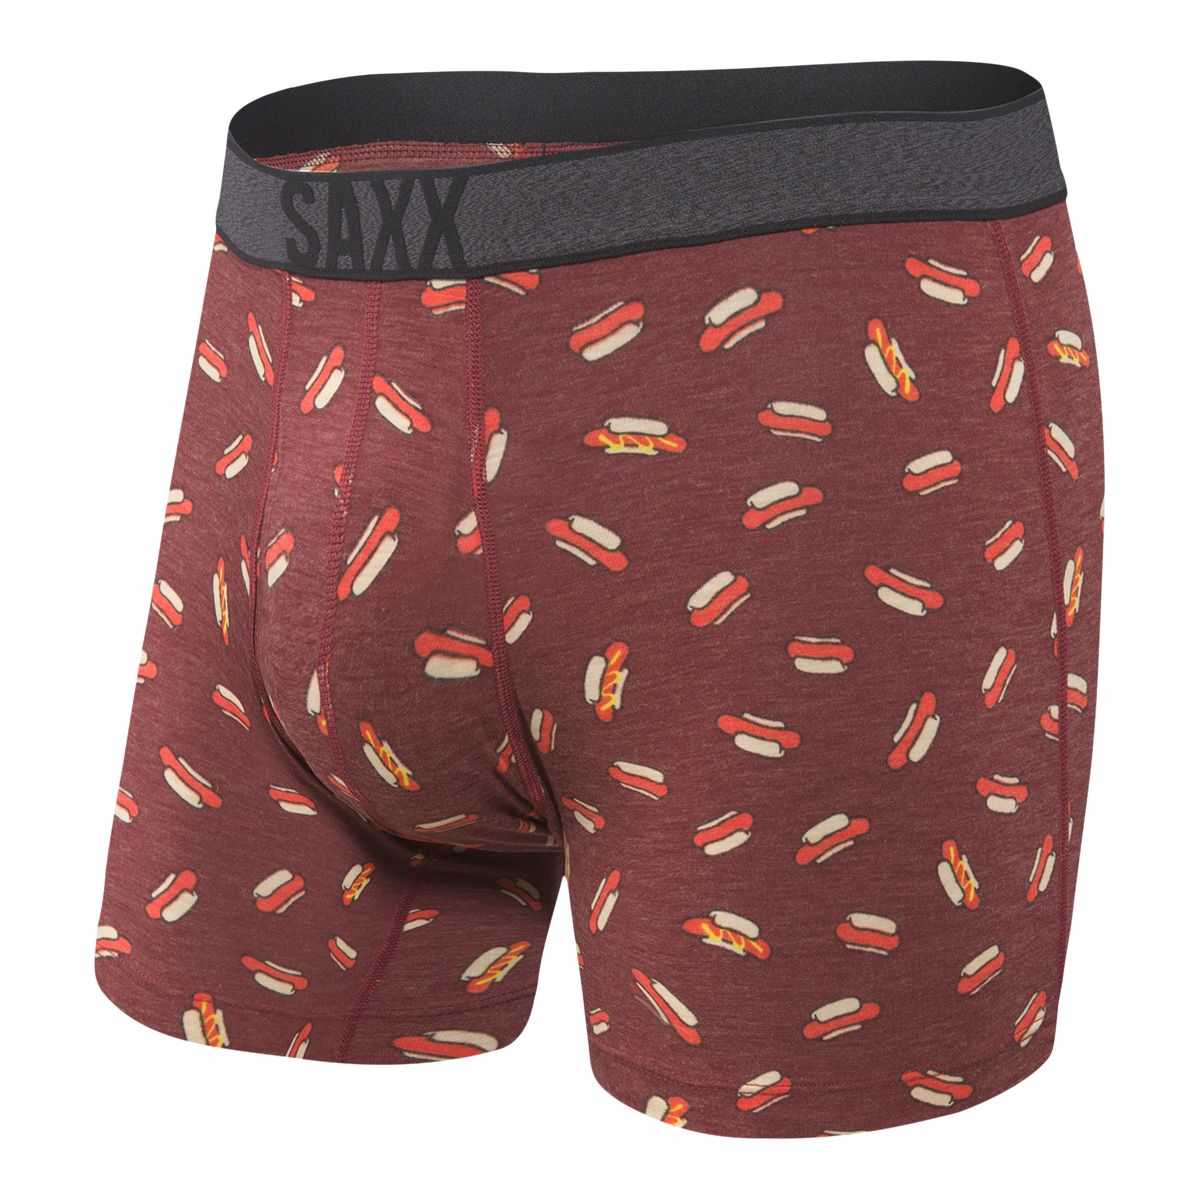 SAXX Sport Mesh Stretch Boxer Briefs - Men's Boxers in Orange